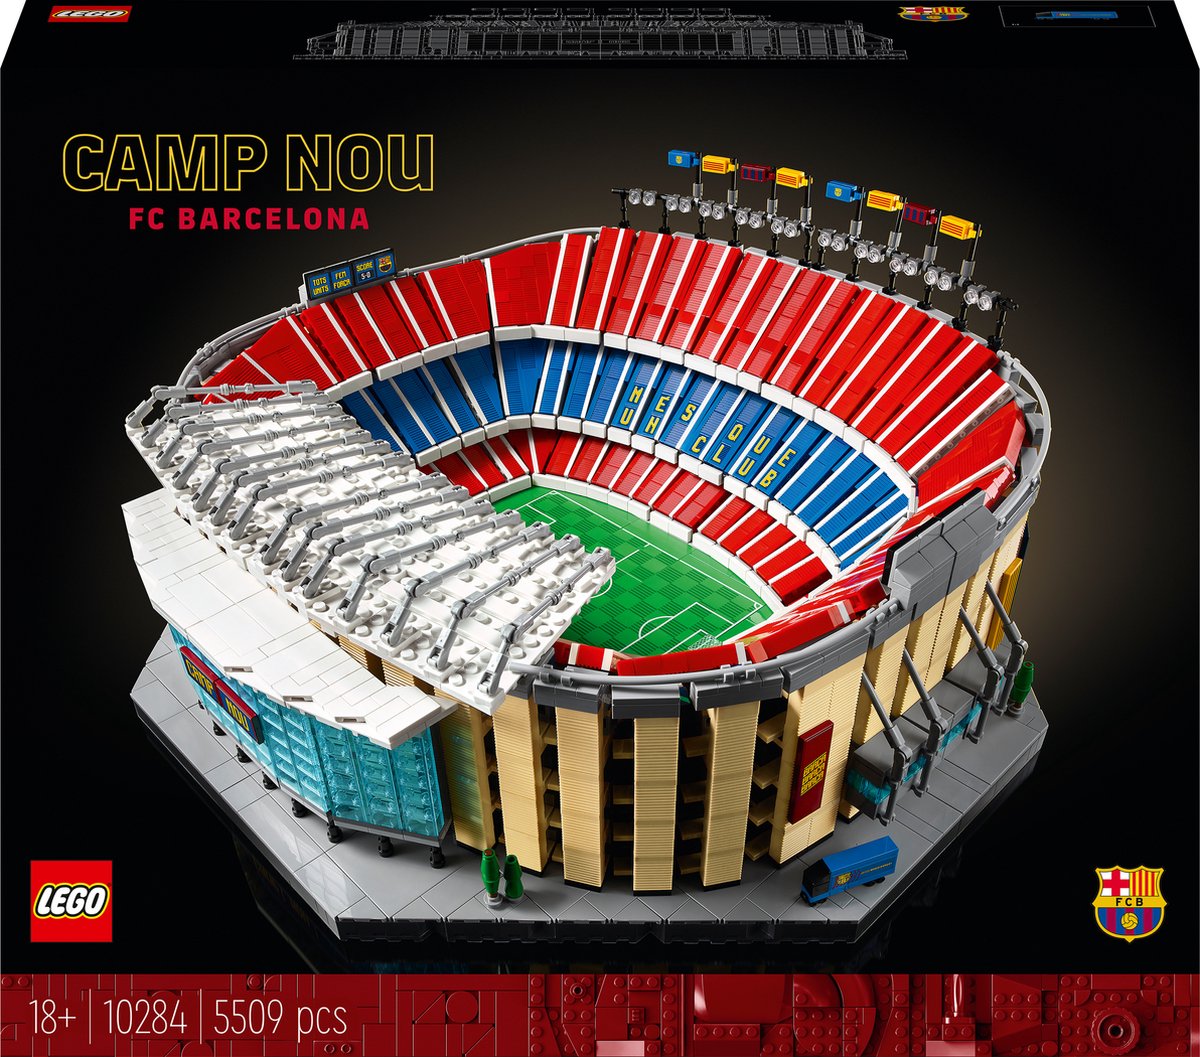 LEGO Creator Expert 10284 Icons Camp Nou - FC Barcelona